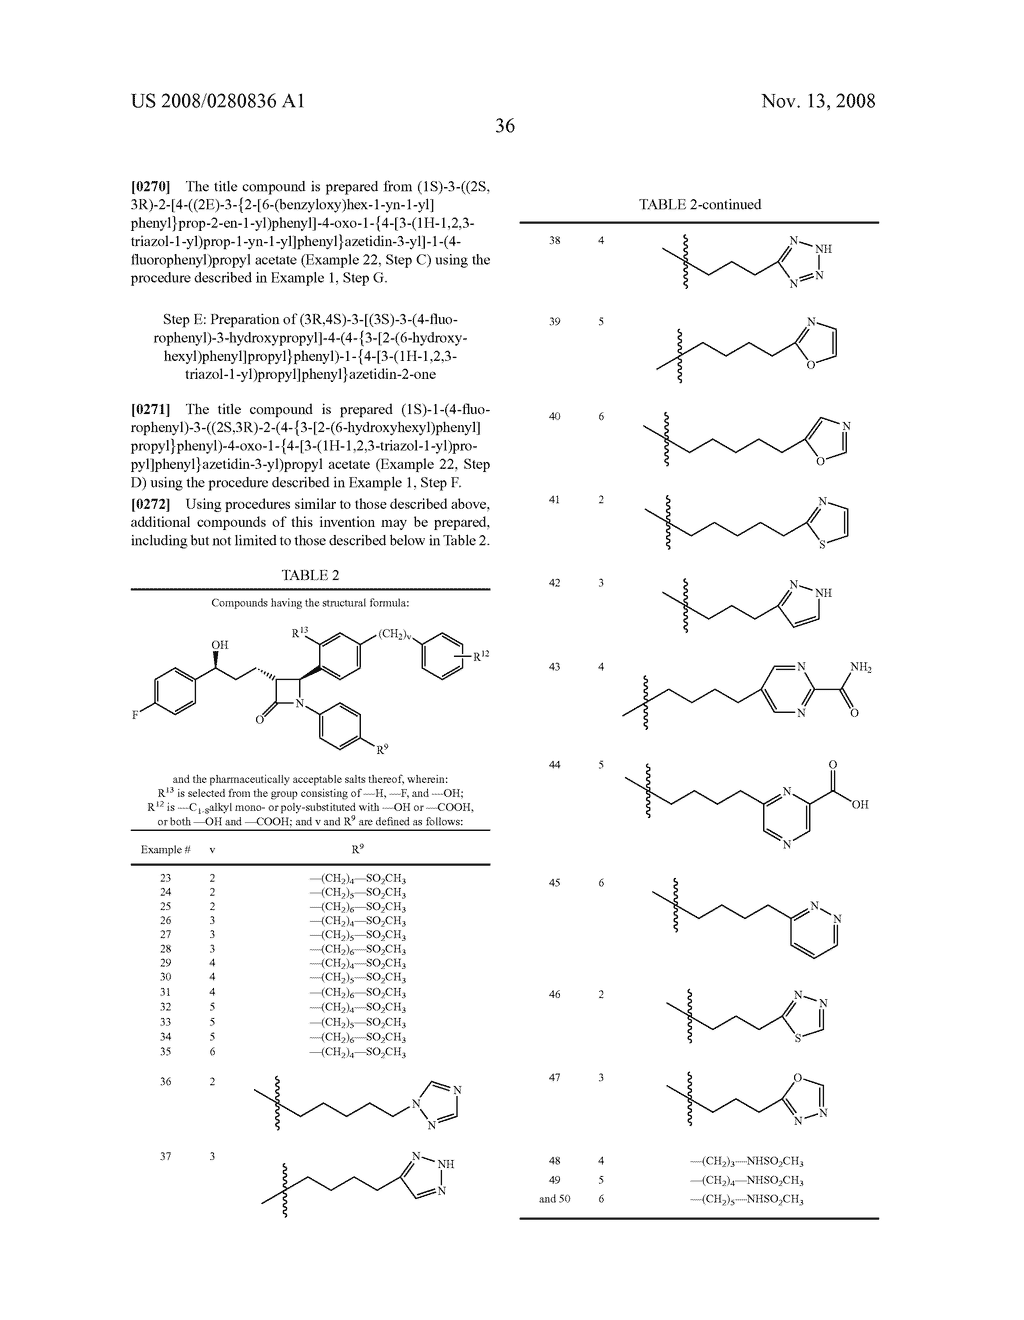 Anti-hypercholesterolemic biaryl azetidinone compounds - diagram, schematic, and image 37